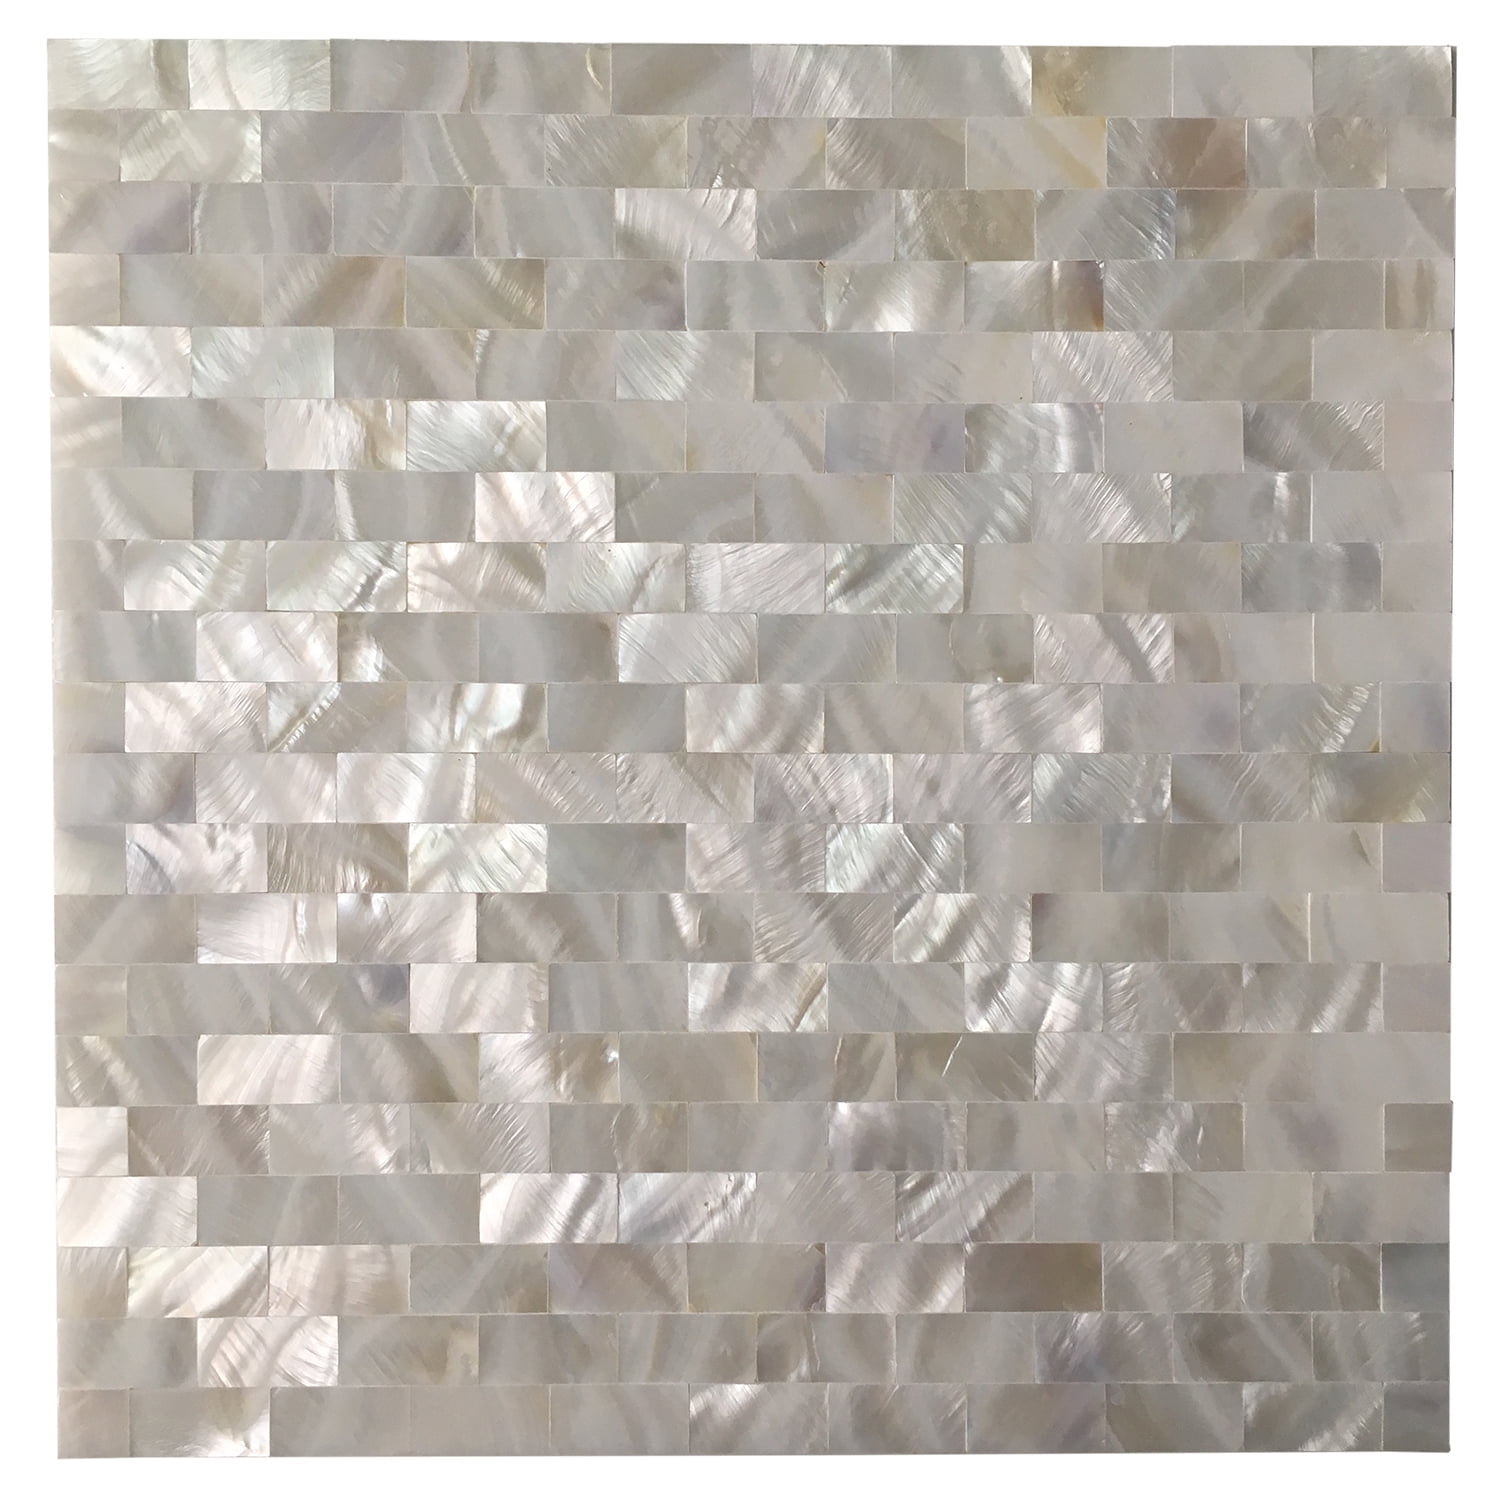 12x12 Art3d Mother of Pearl Shell Mosaic Tile for Kitchen Backsplash 10 Tiles